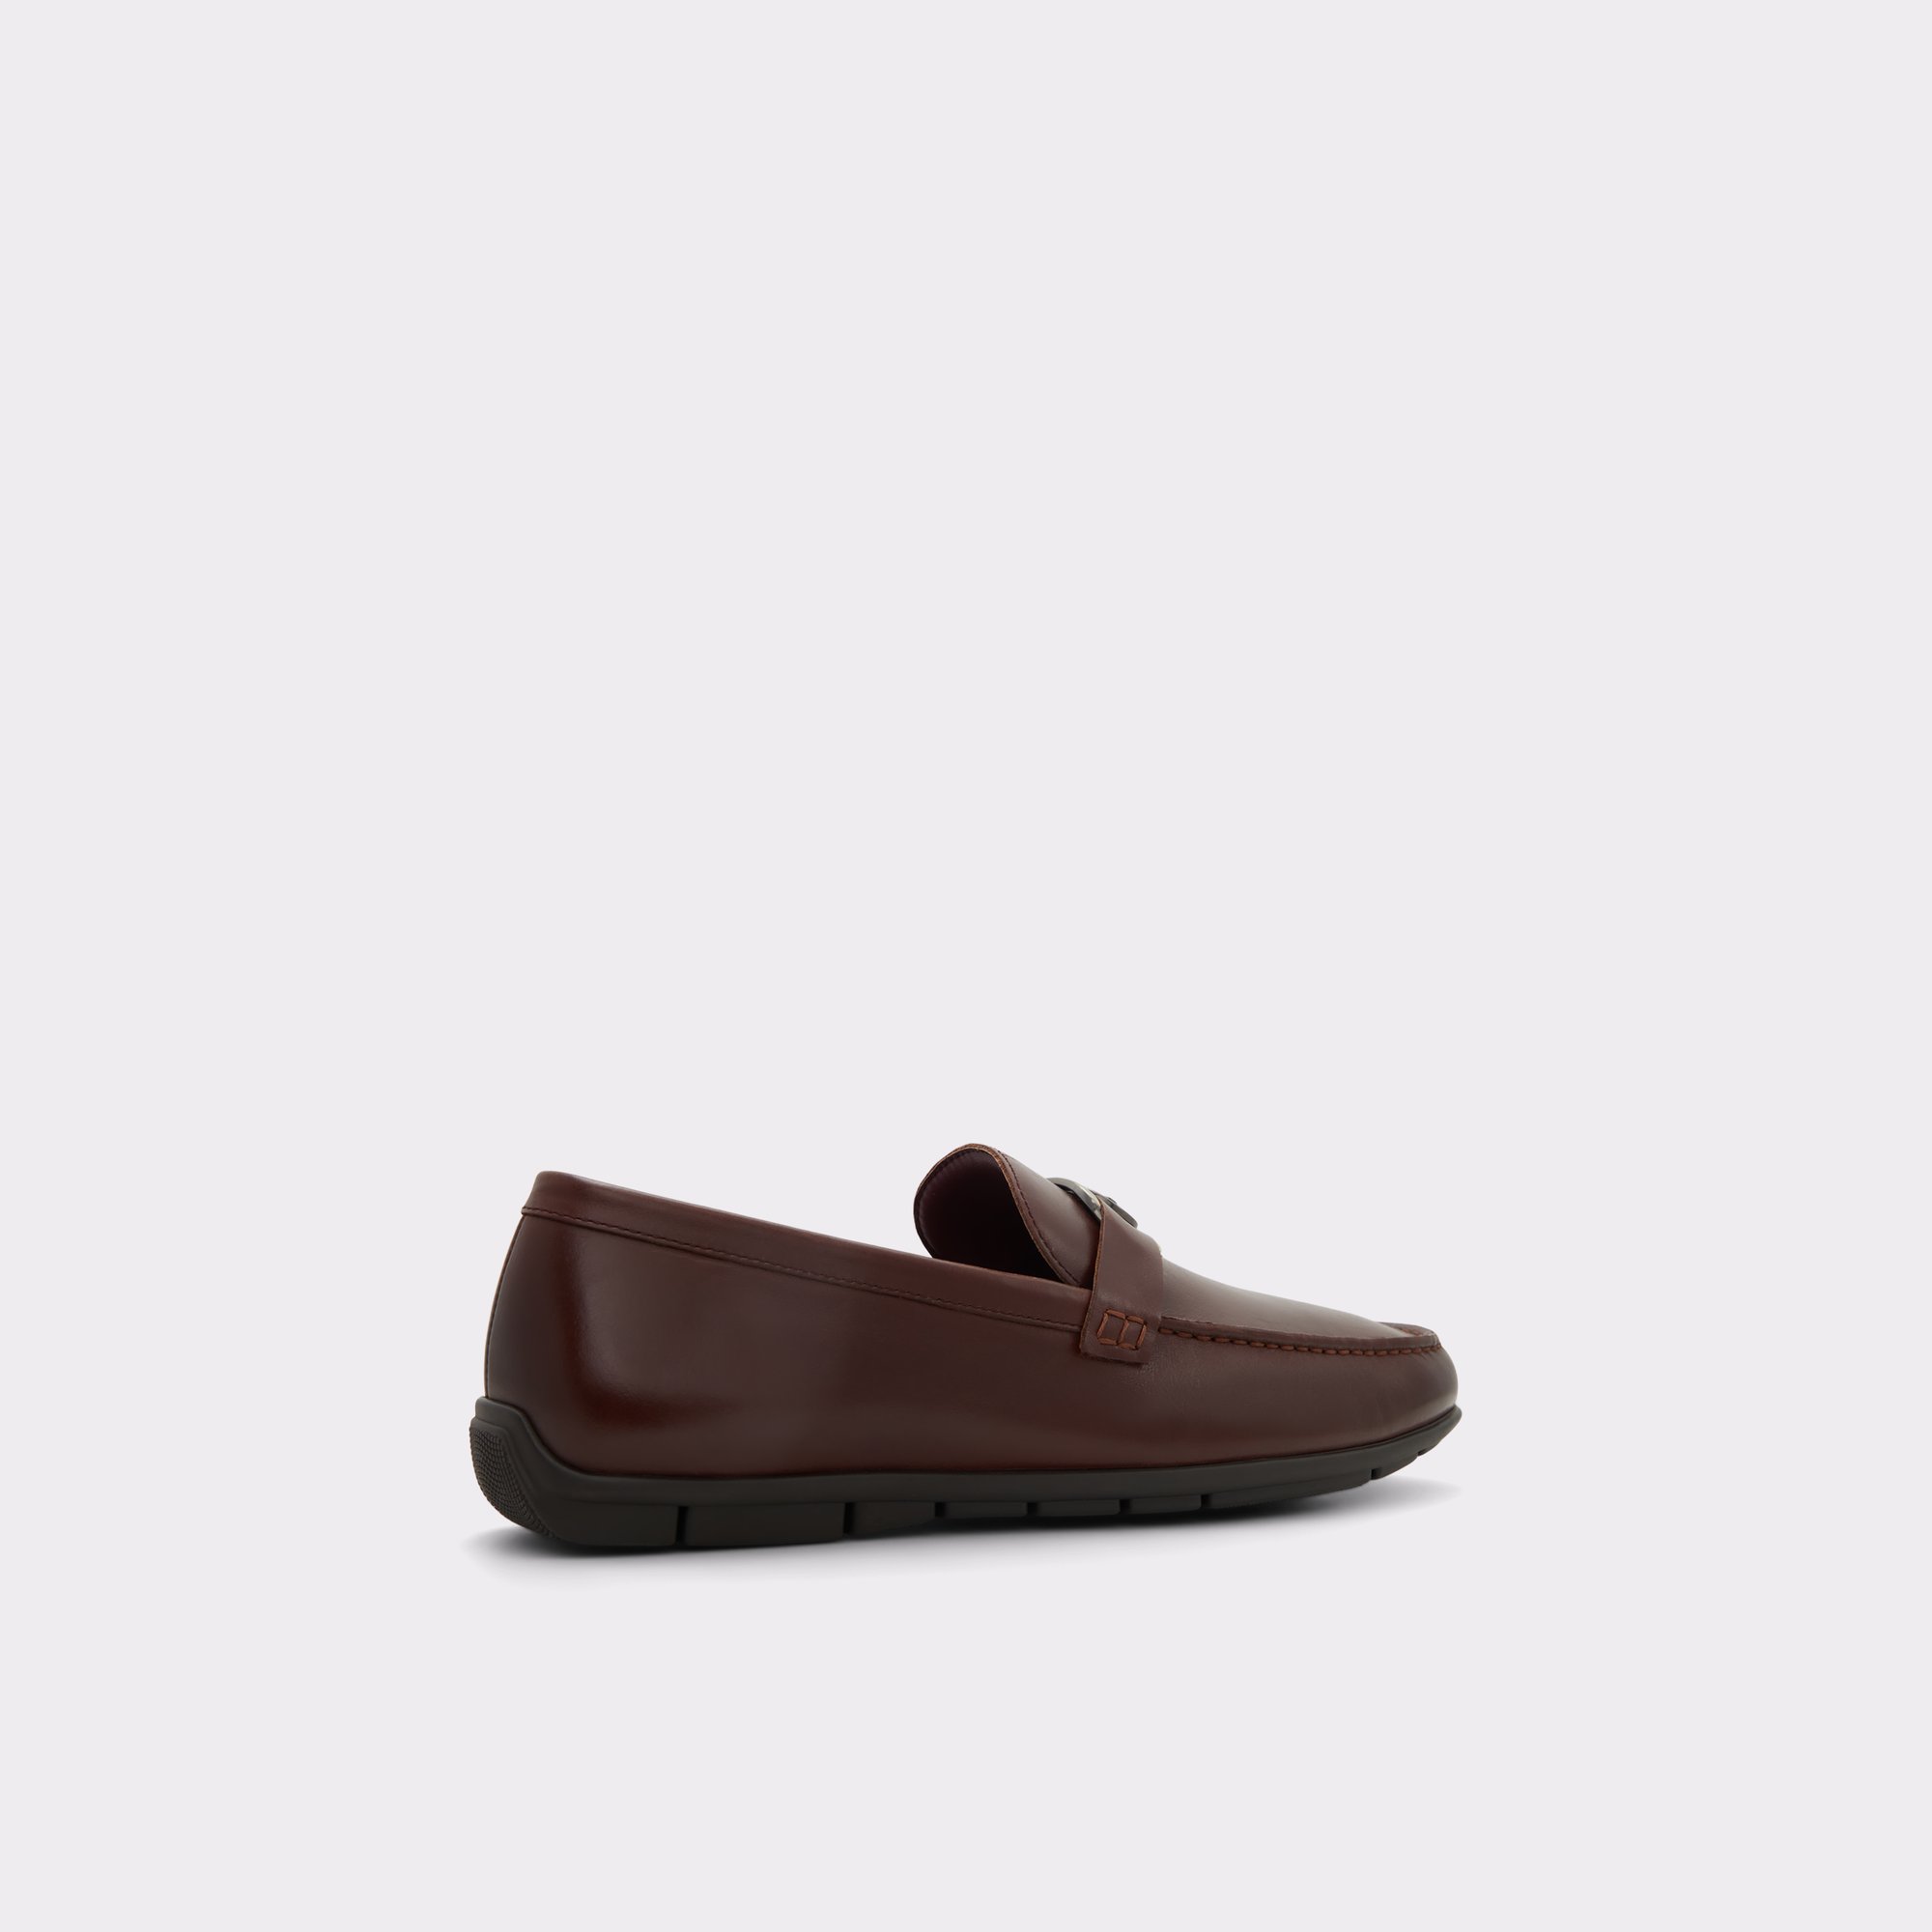 Haan Bordo Men's Casual Shoes | ALDO Canada